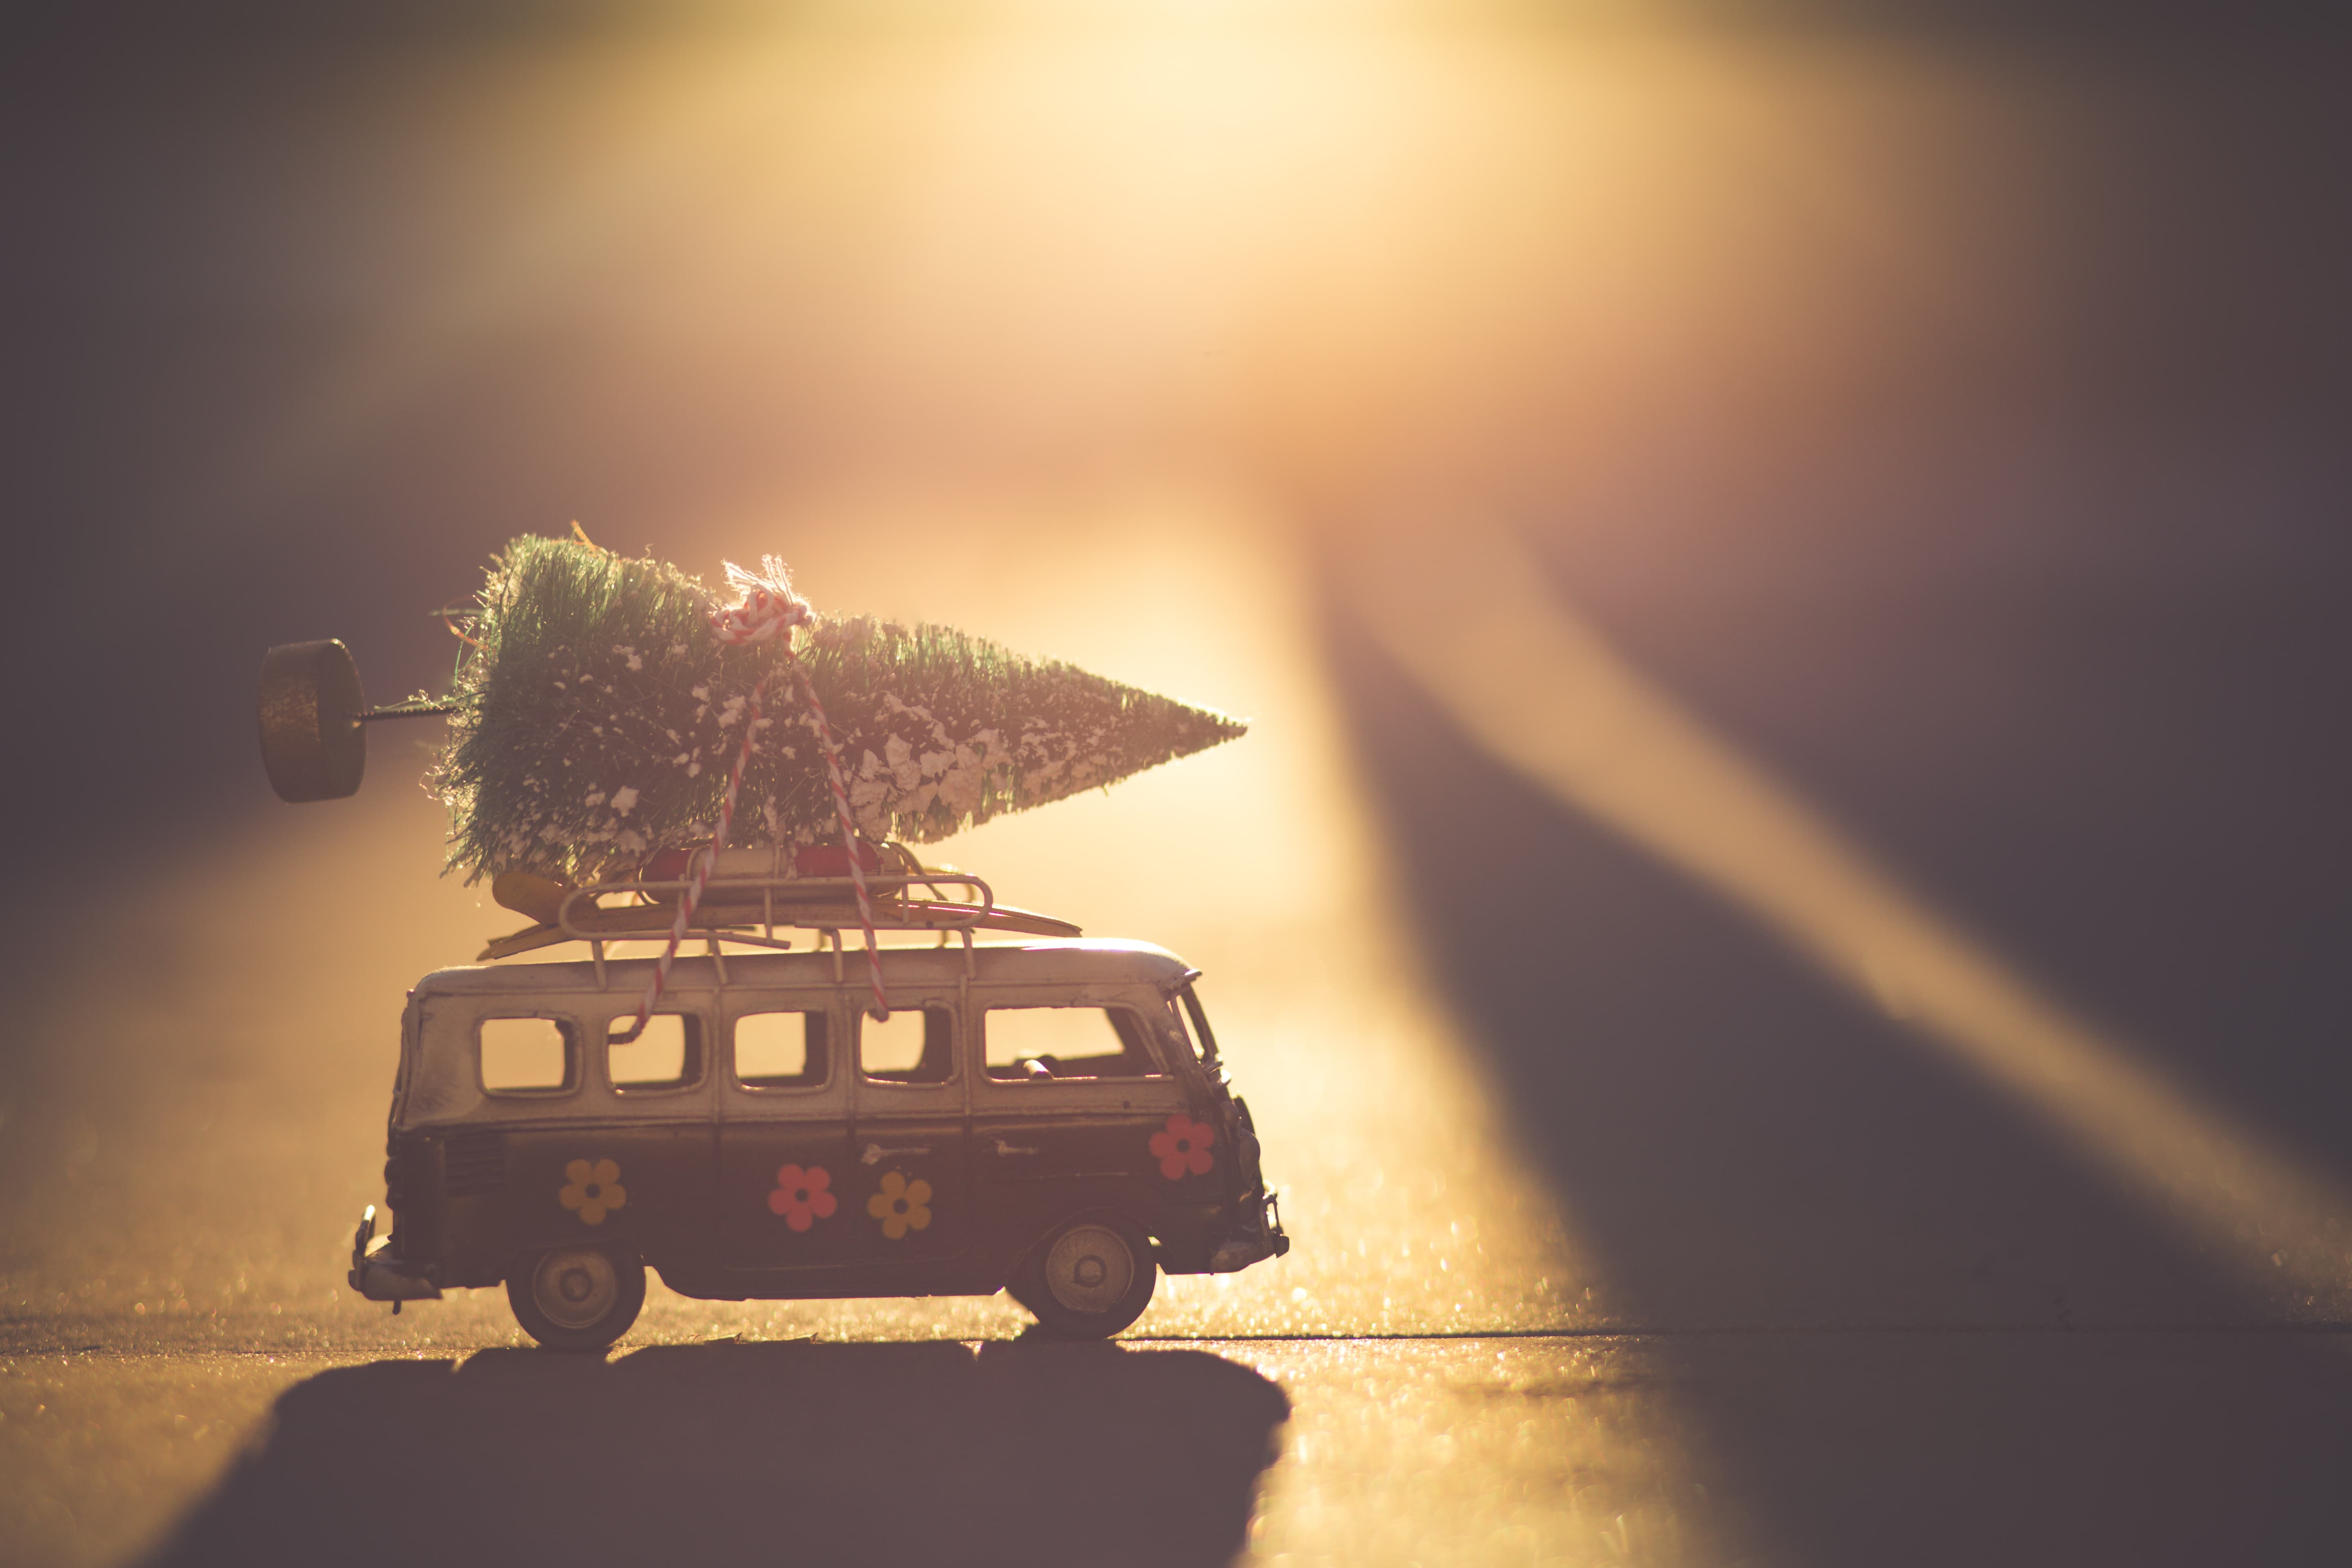 Toy van with Christmas tree